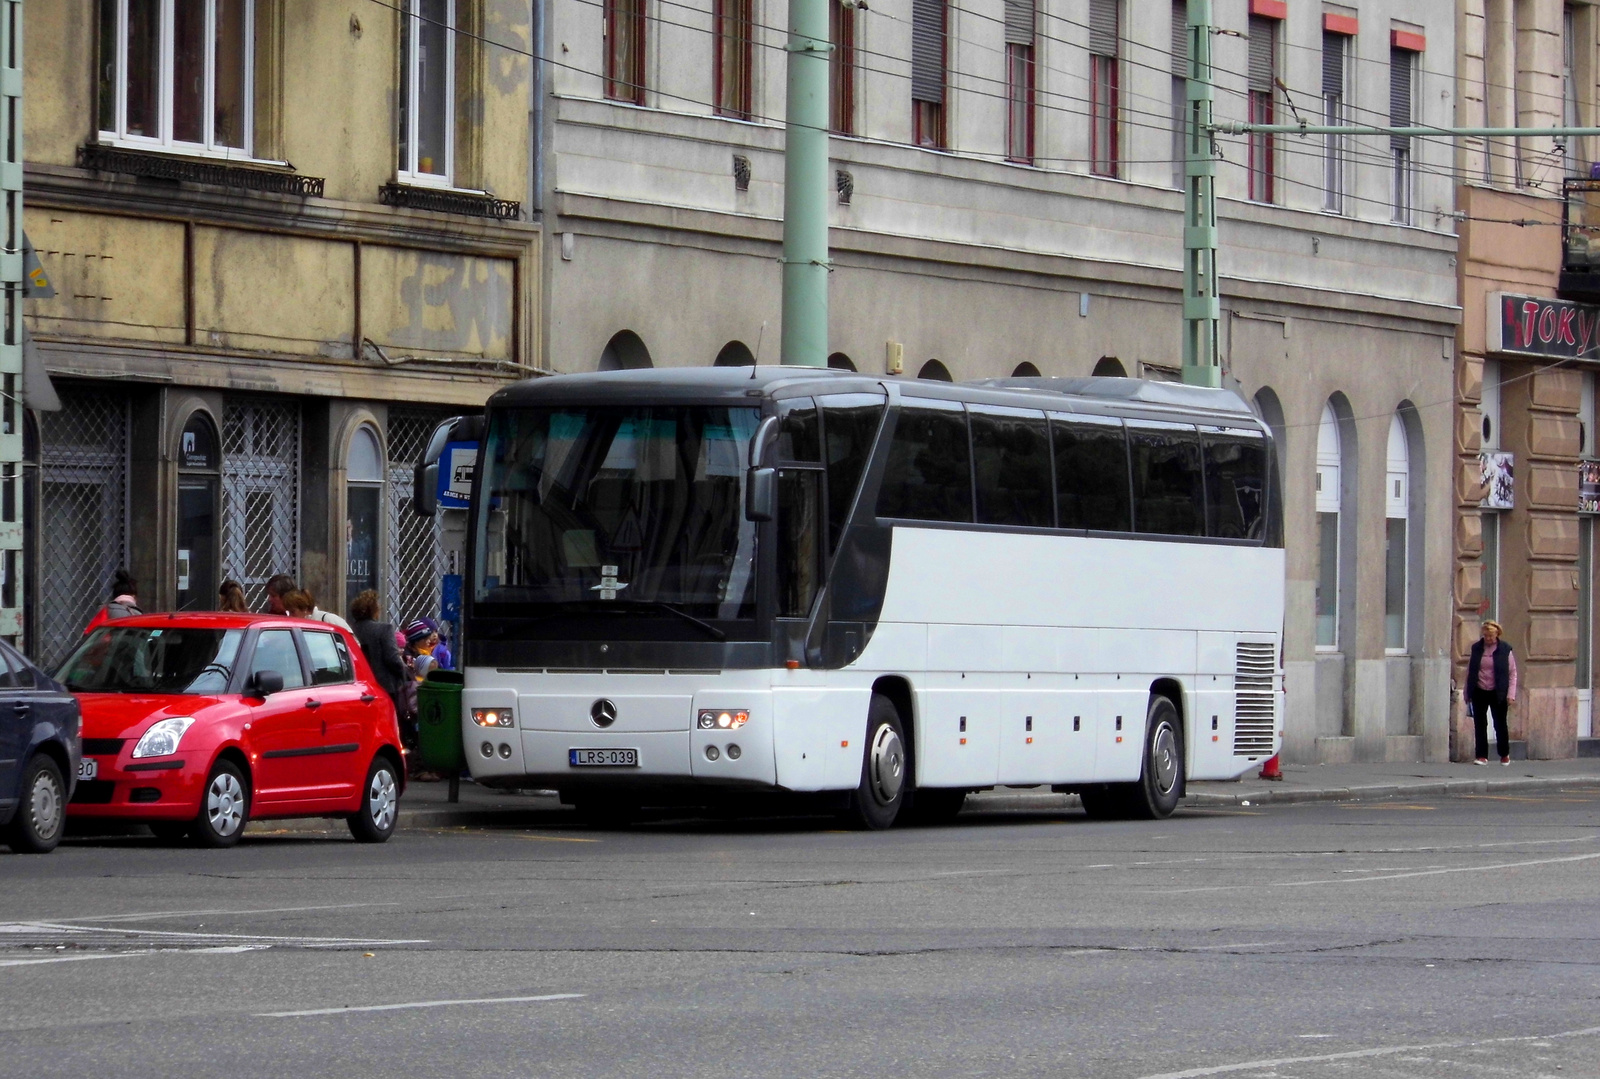 Mercedes-Benz Tourismo (LRS-039)